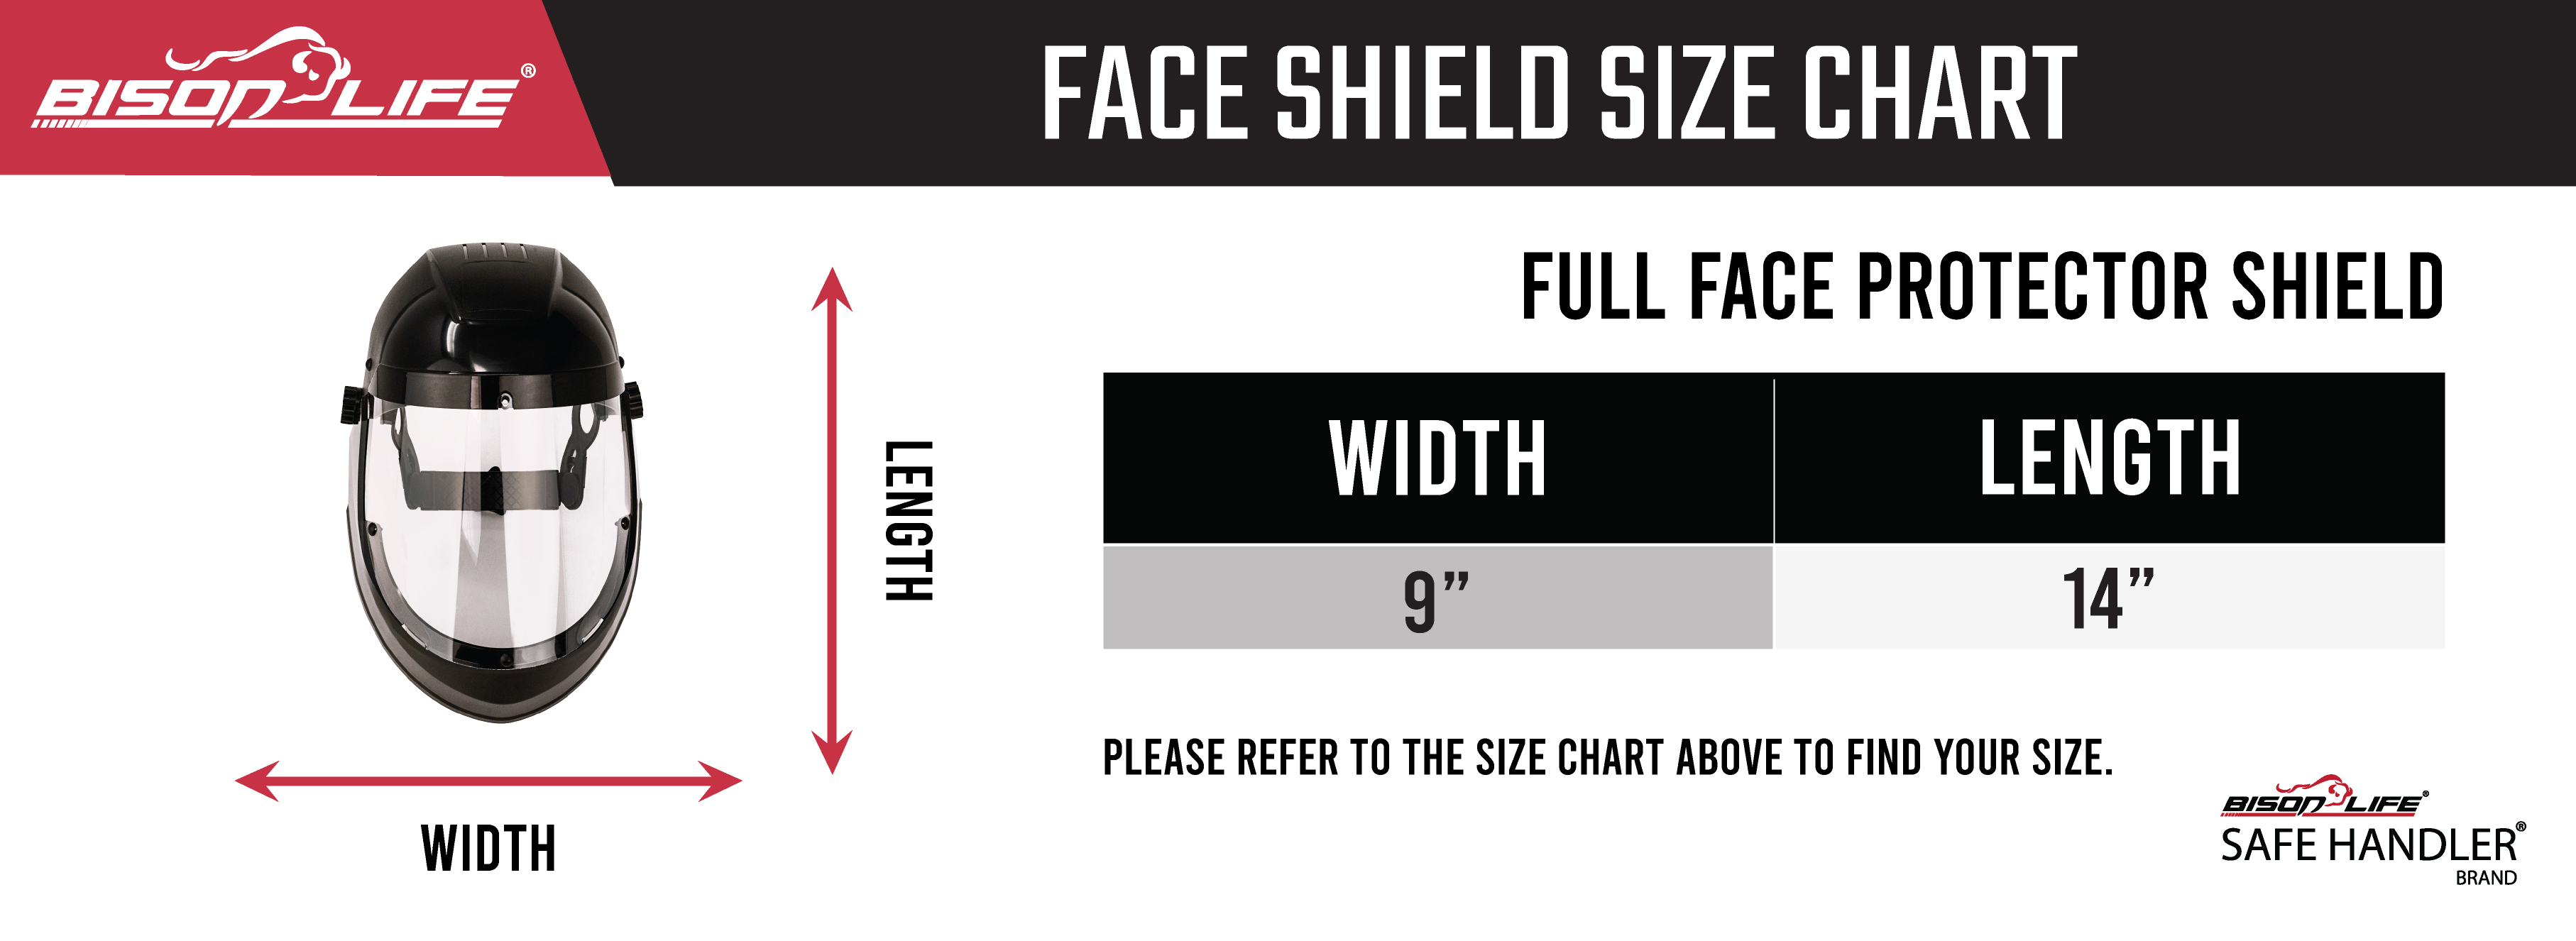 Safe Handler Full Face Protector Shield Size Chart